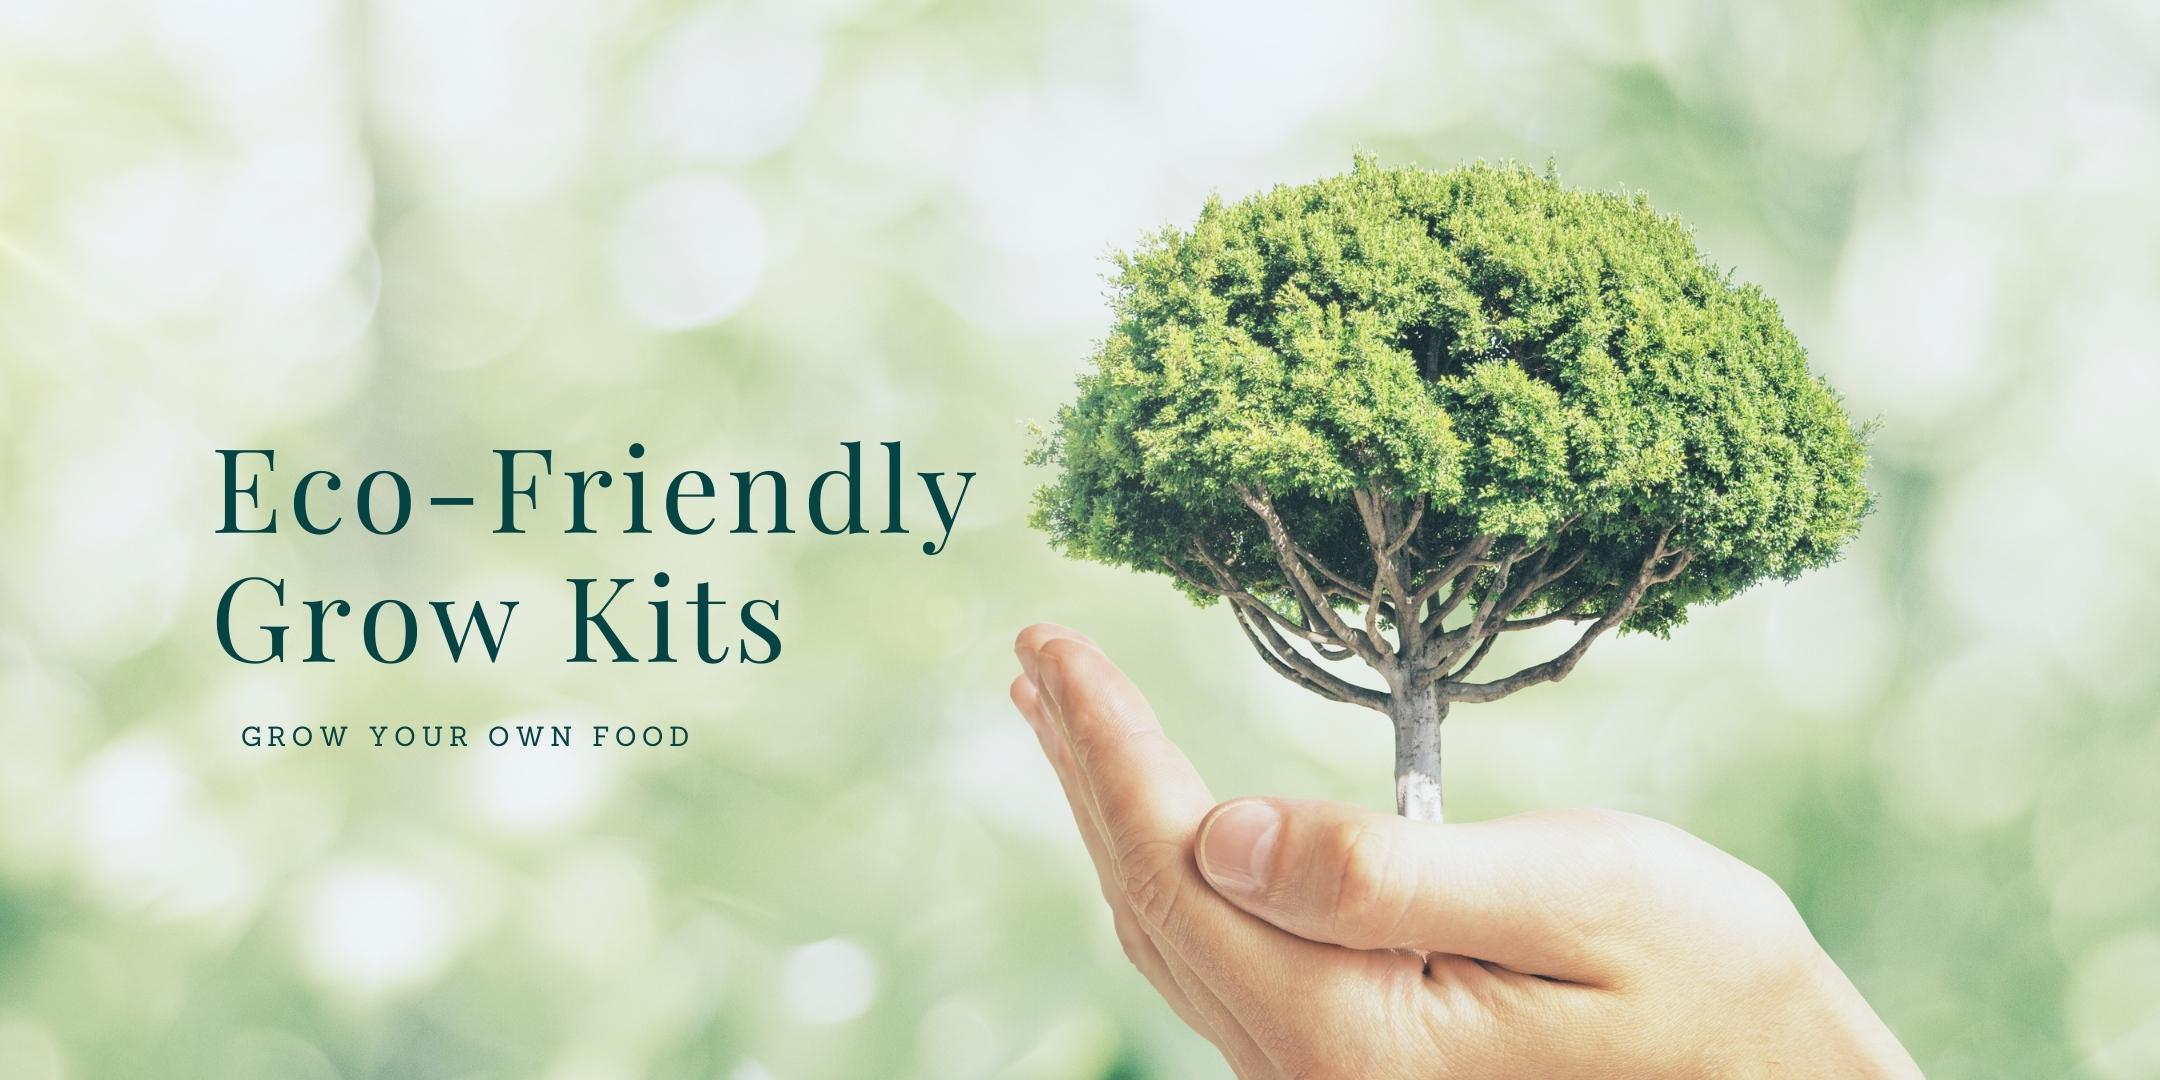 eco friendly grow kit,eco friendly gifts,sustainable gifts,eco friendly return gifts